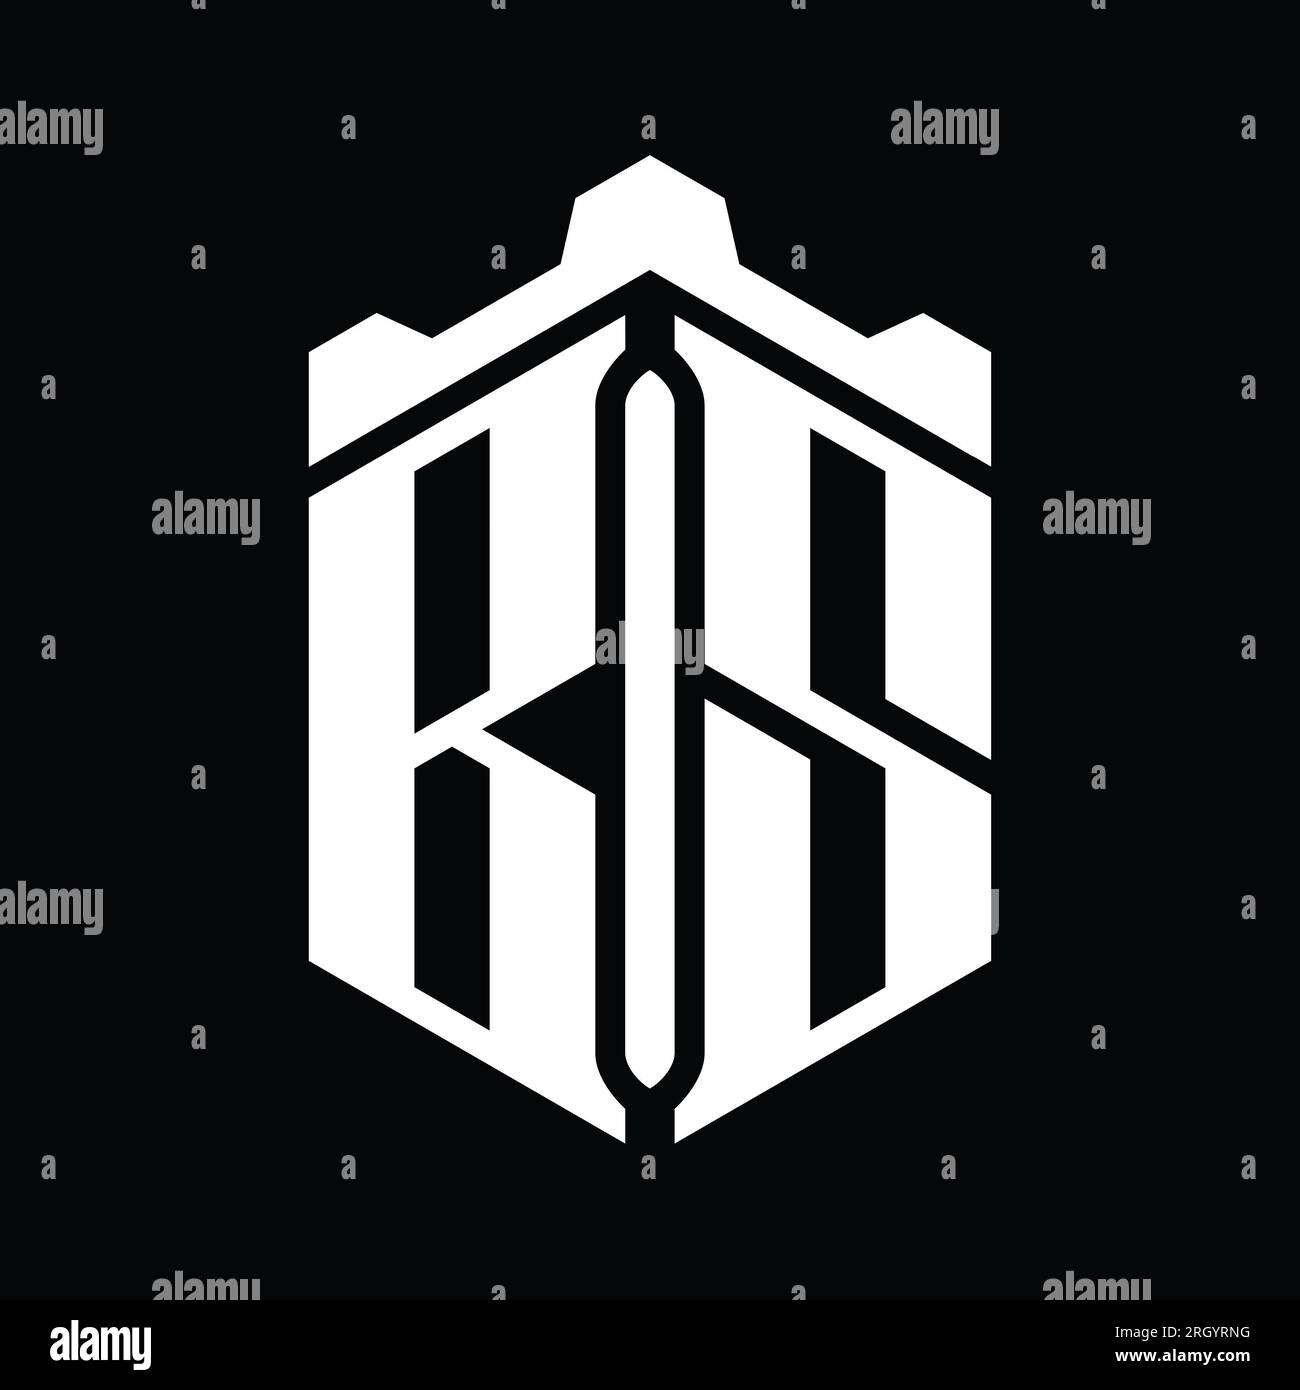 BS Letter Logo monogram hexagon shape with crown castle geometric style design template Stock Photo